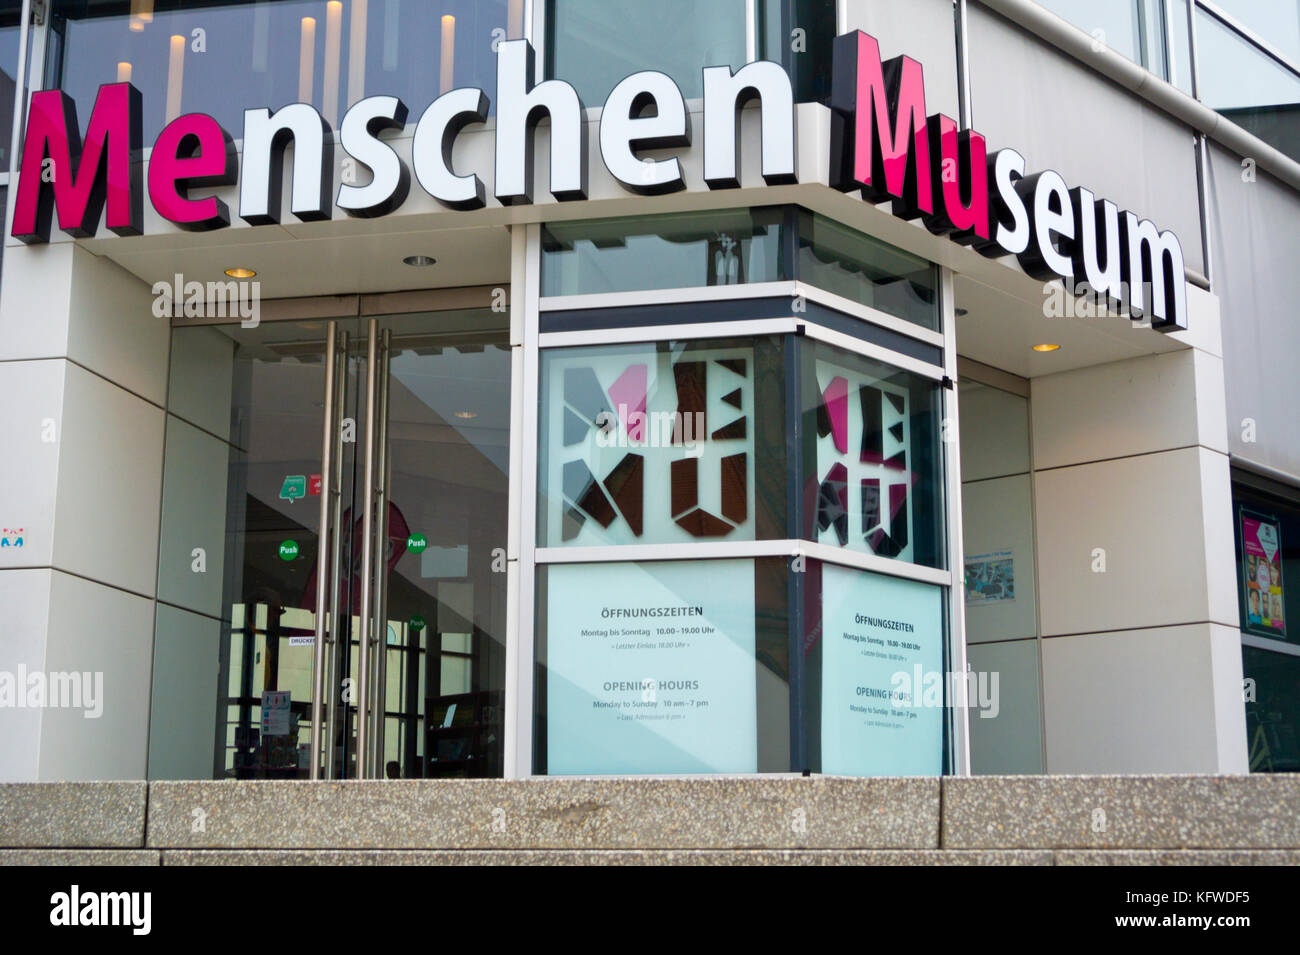 MeMu, Menschen museum, tv tower, Alexanderplatz, Berlin, Germany Stock Photo